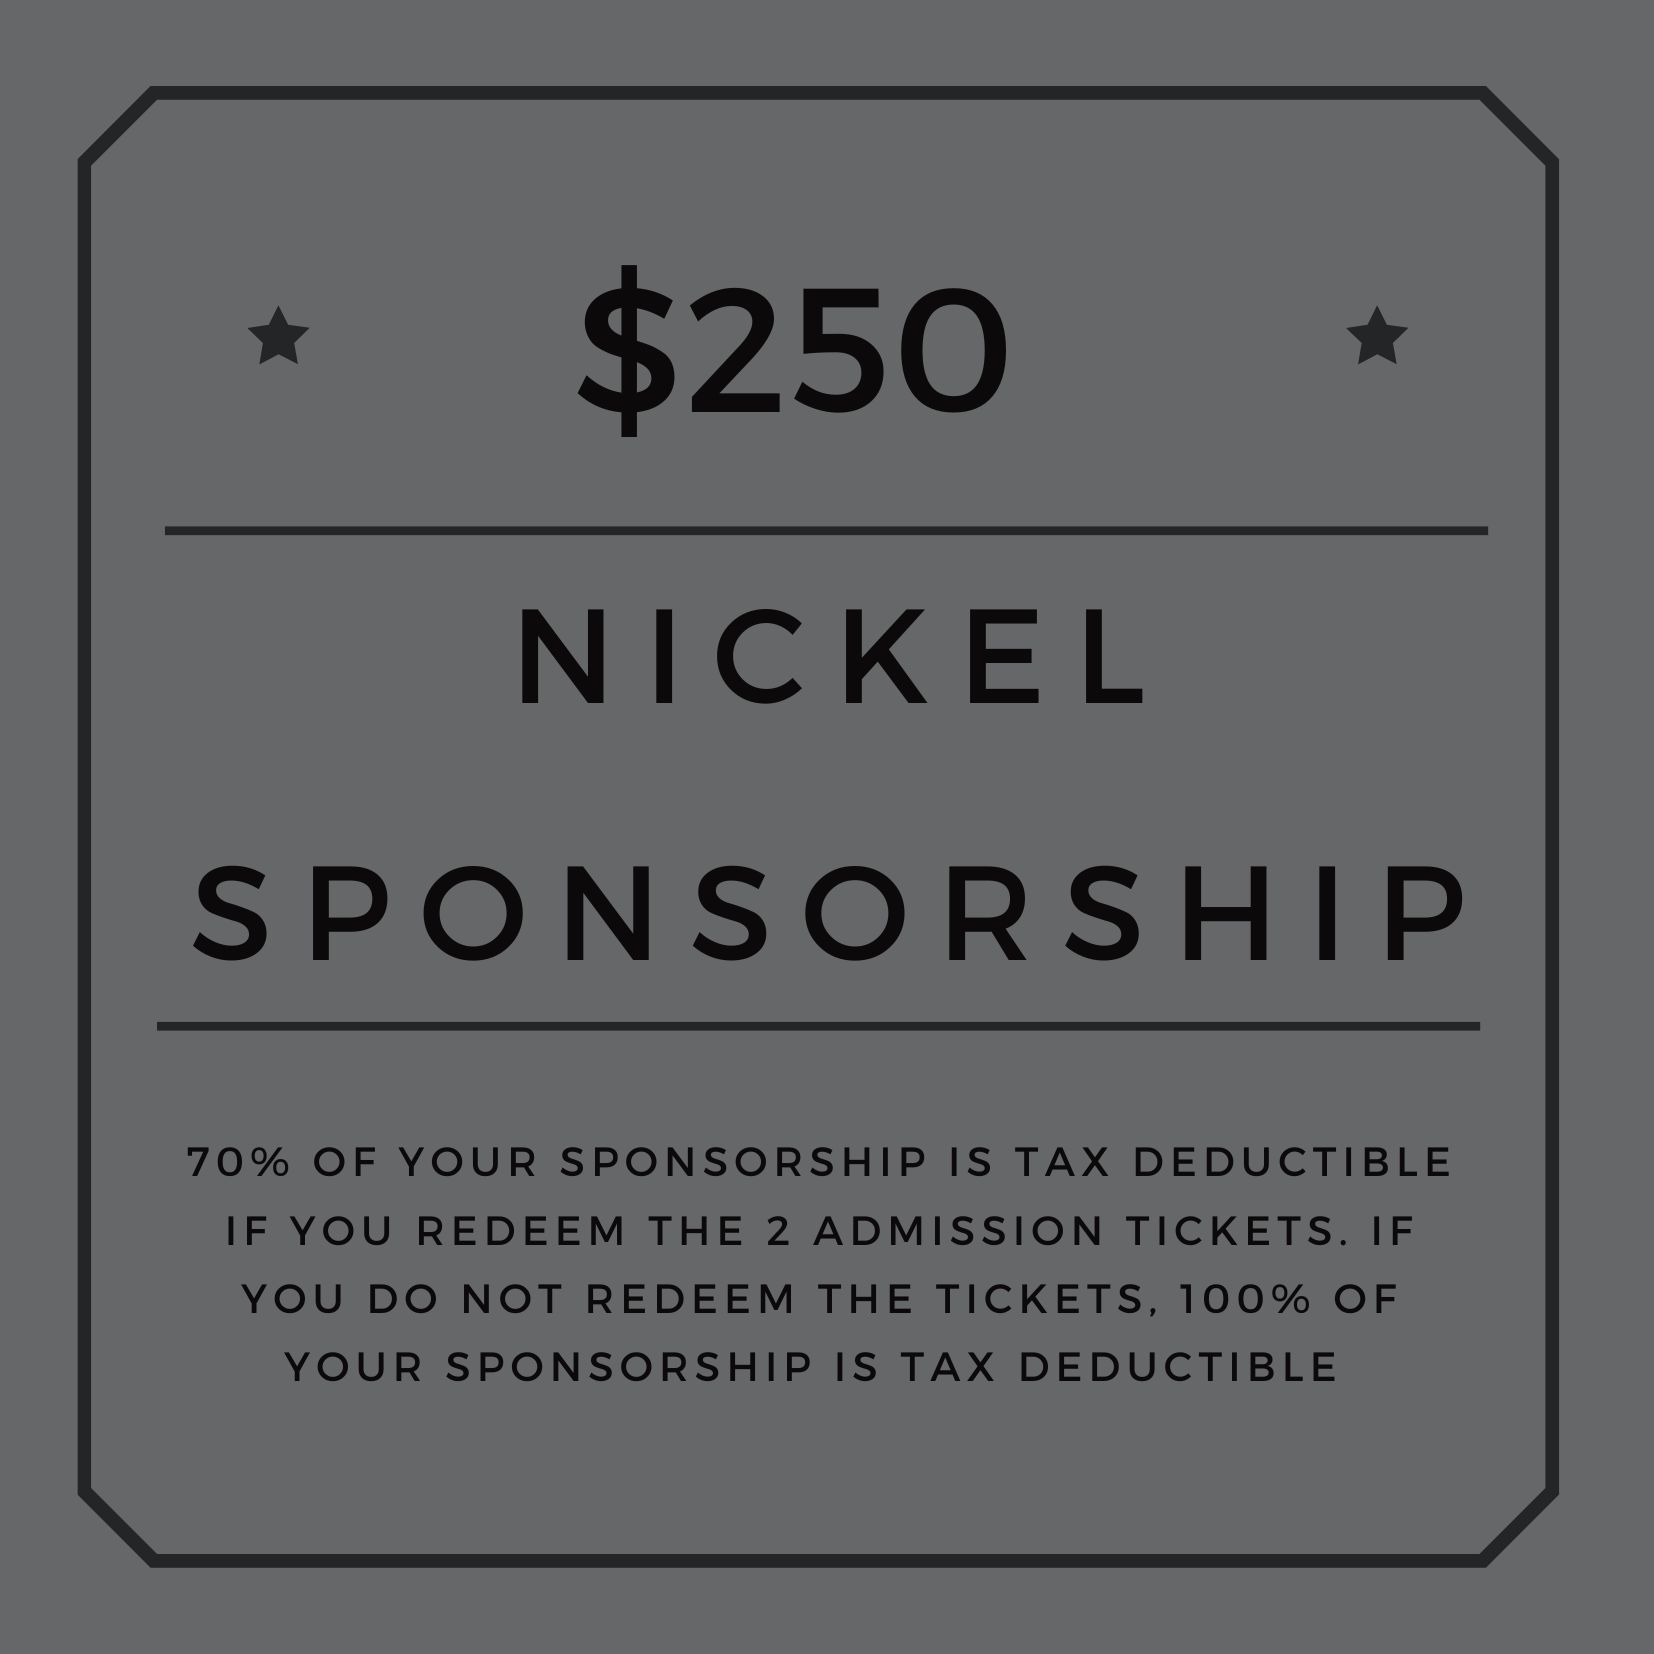 Nickel Sponsorship Level ($250)